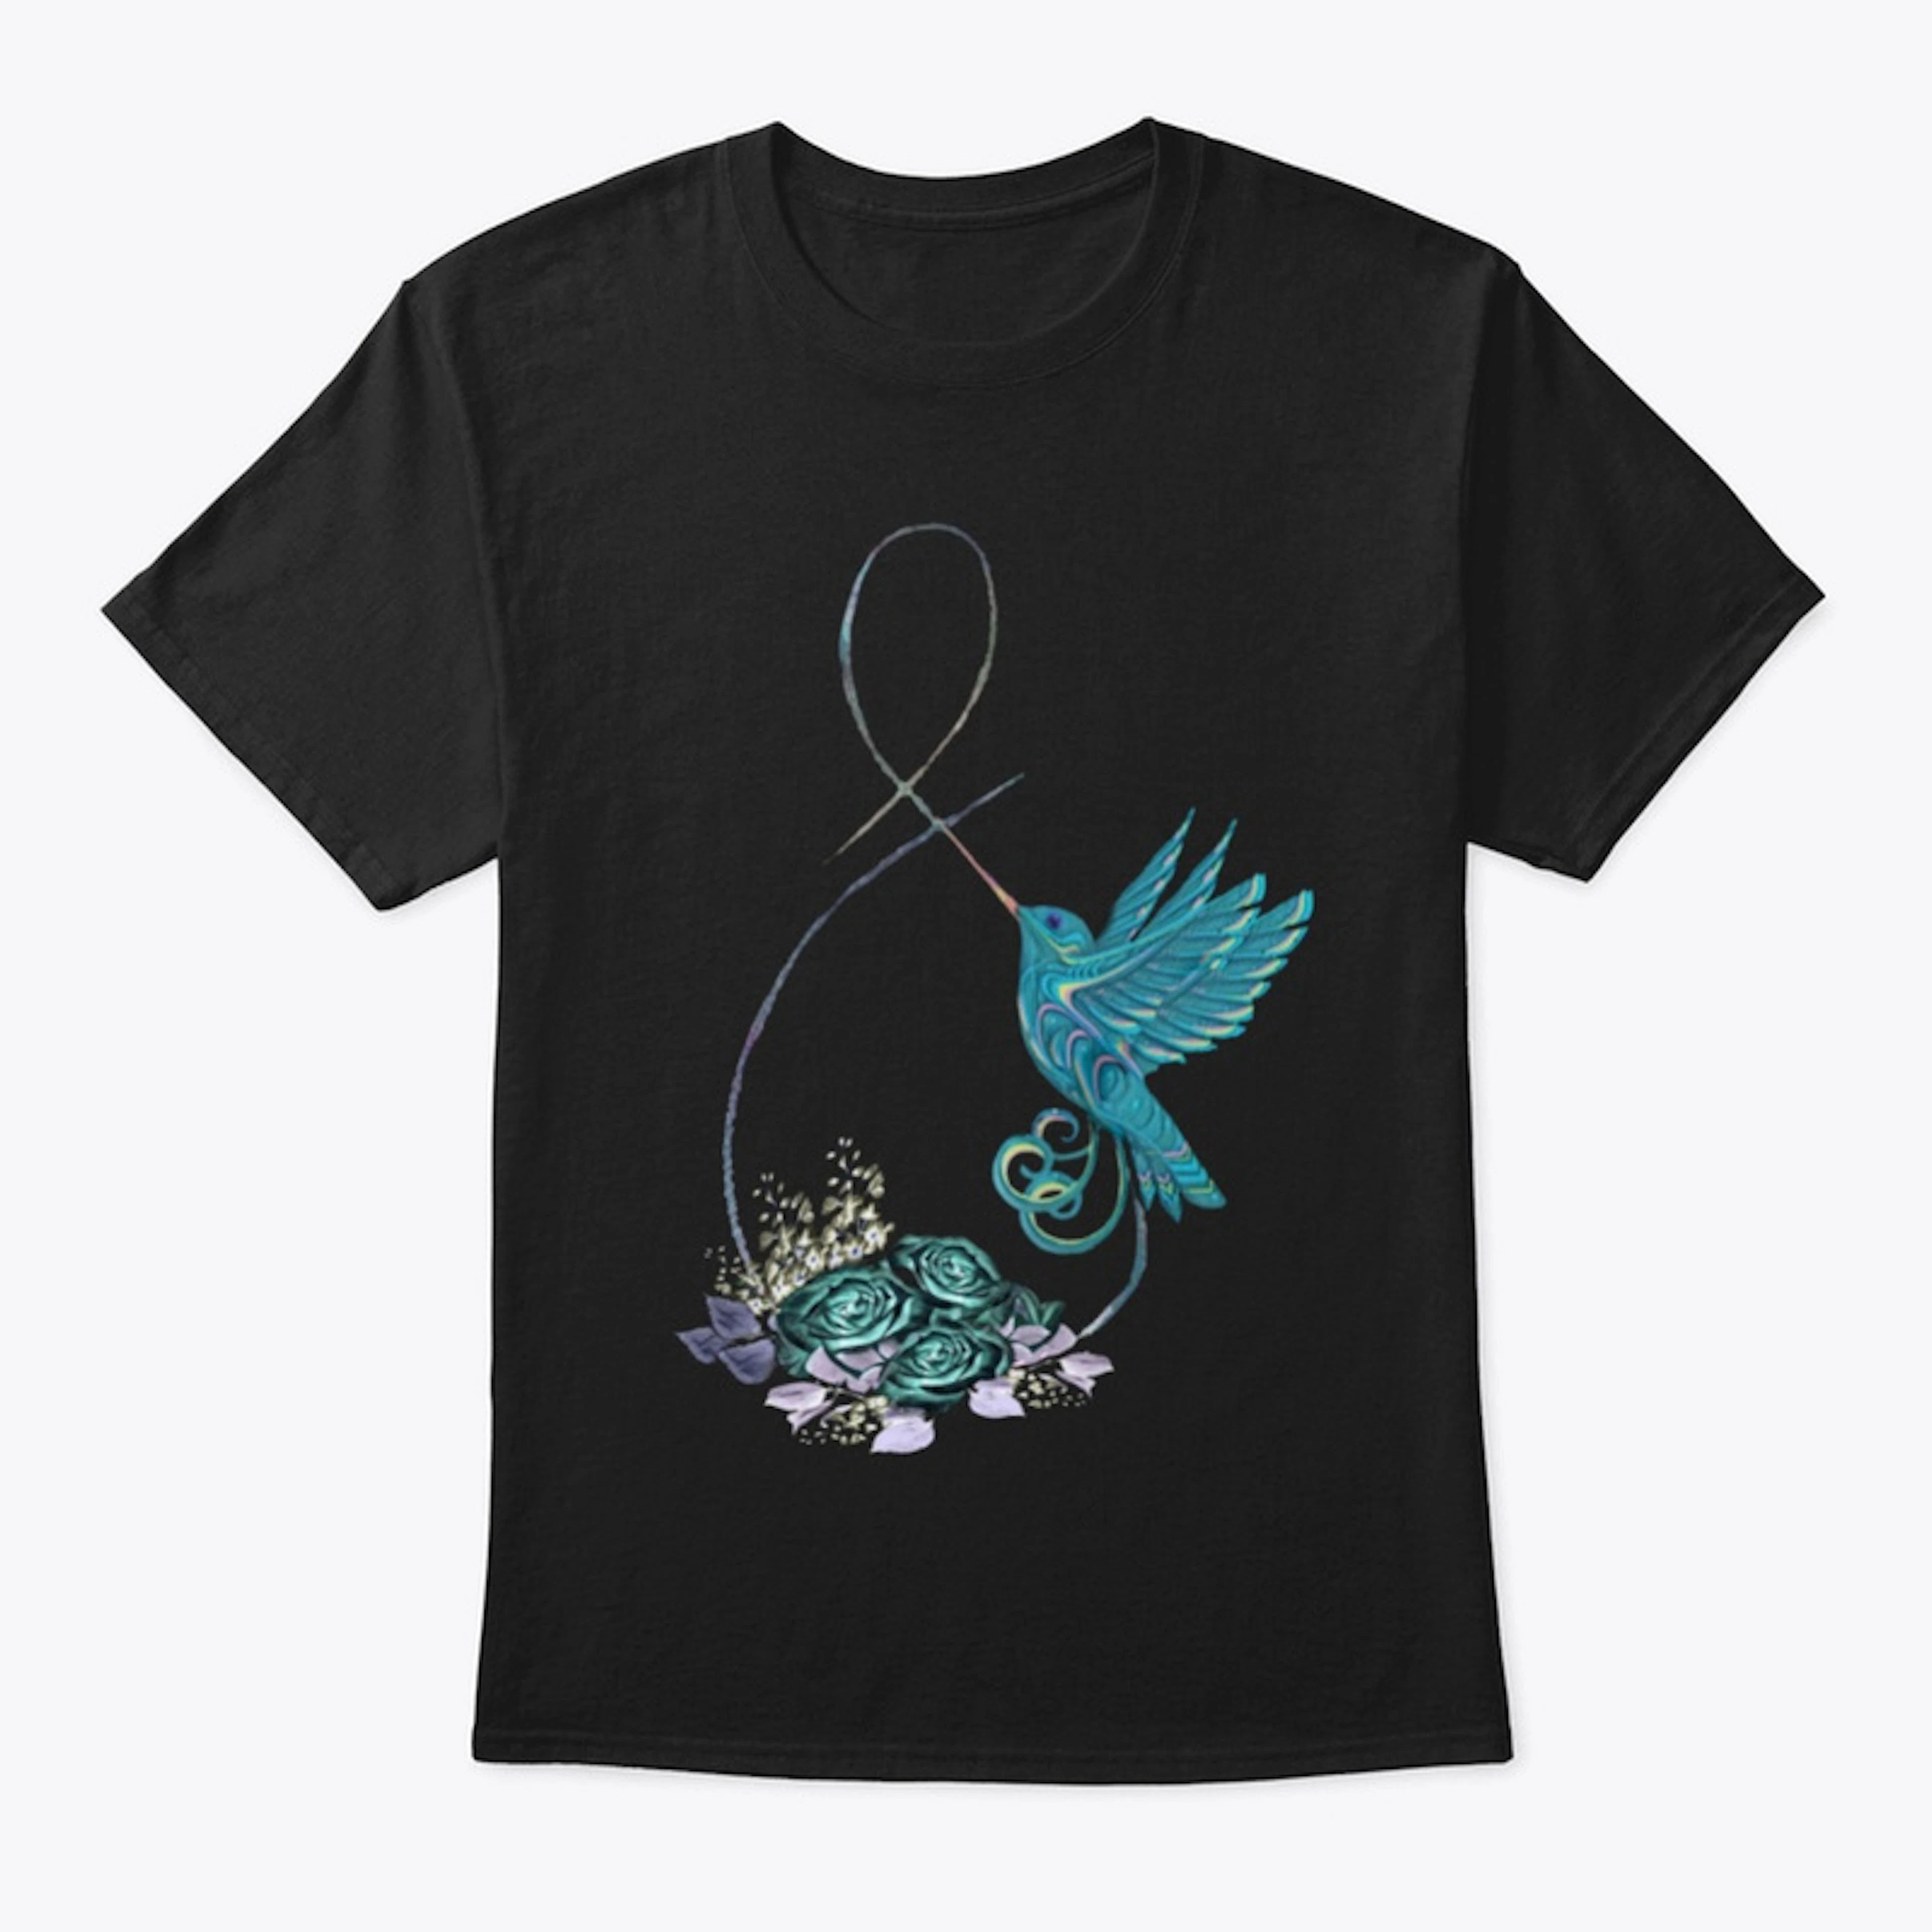 Infinity symbol whit hummingbird